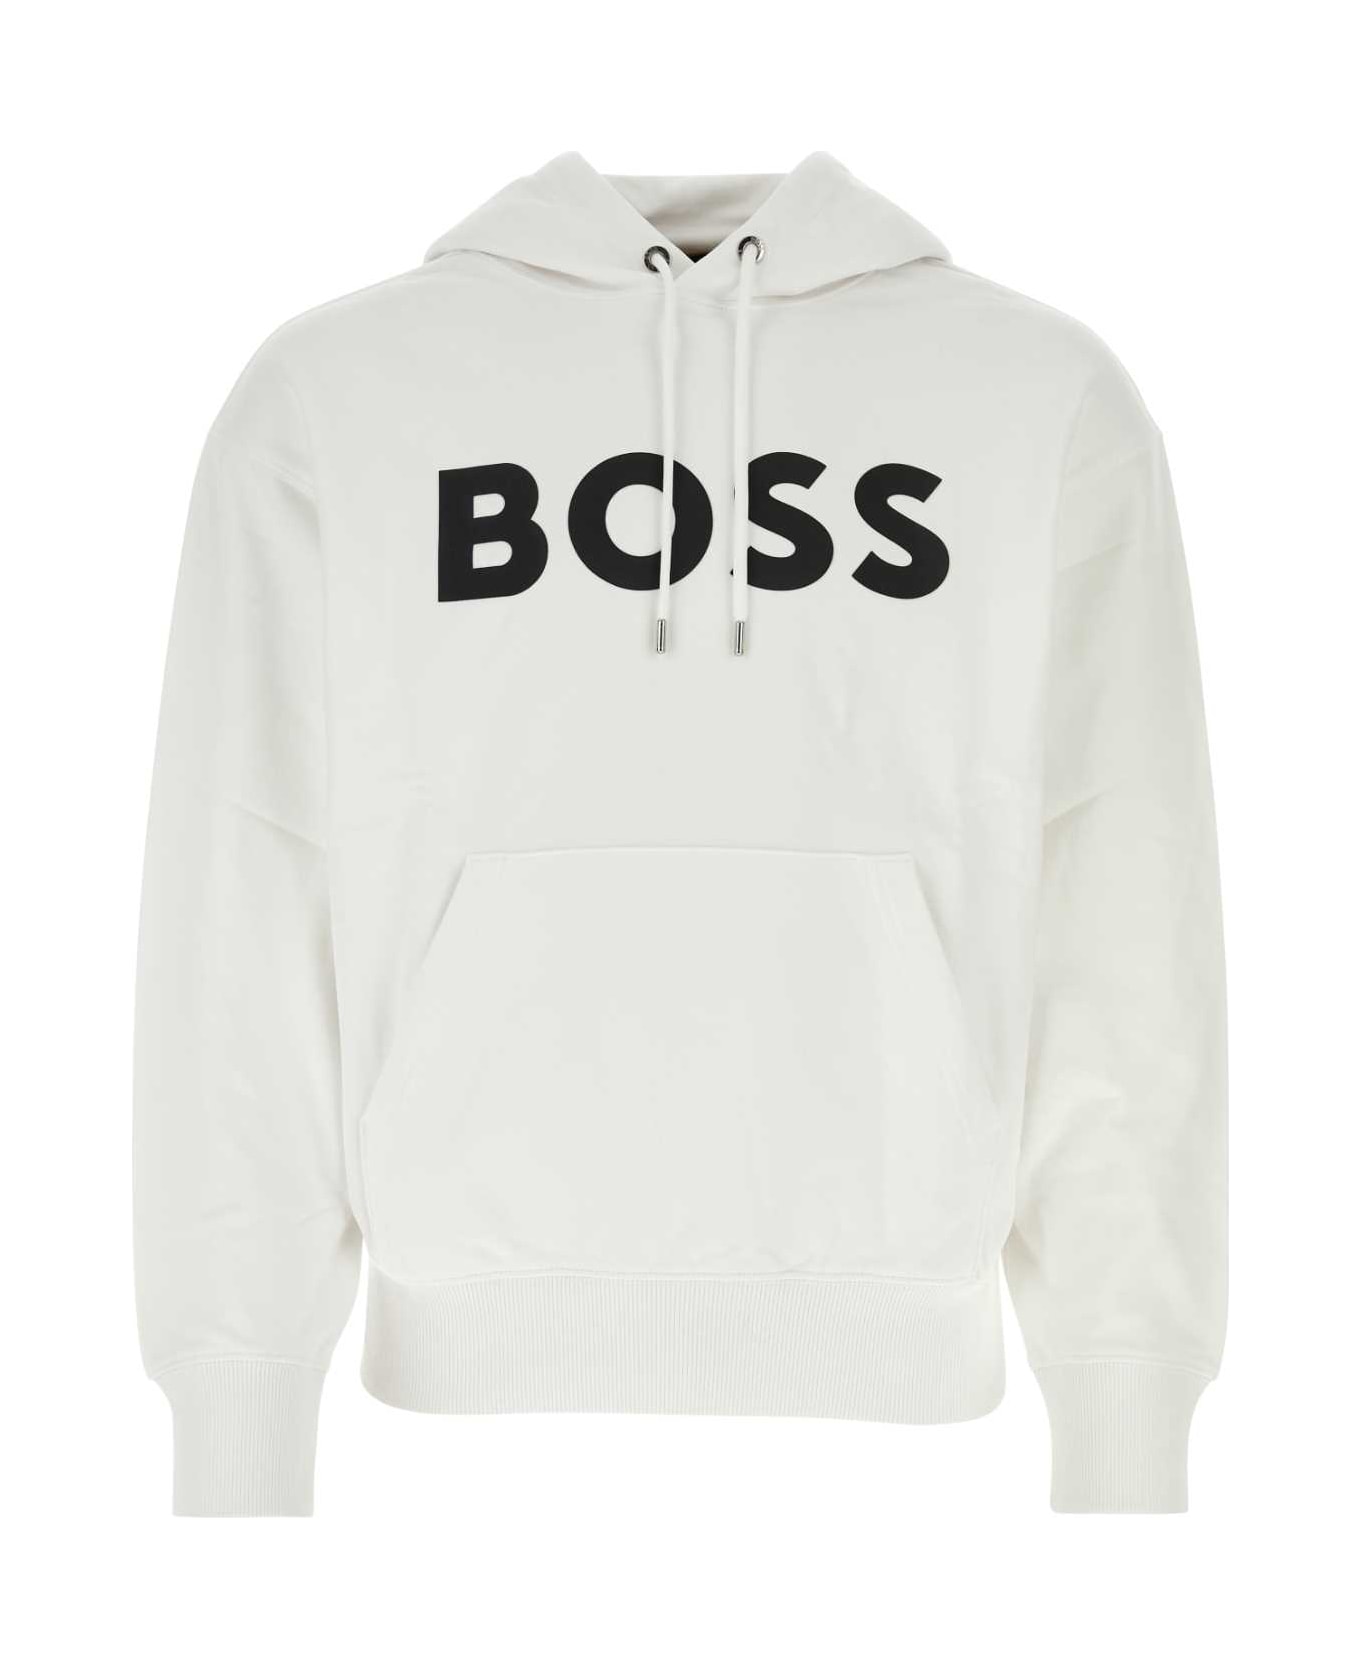 Hugo Boss White Cotton Sweatshirt - White